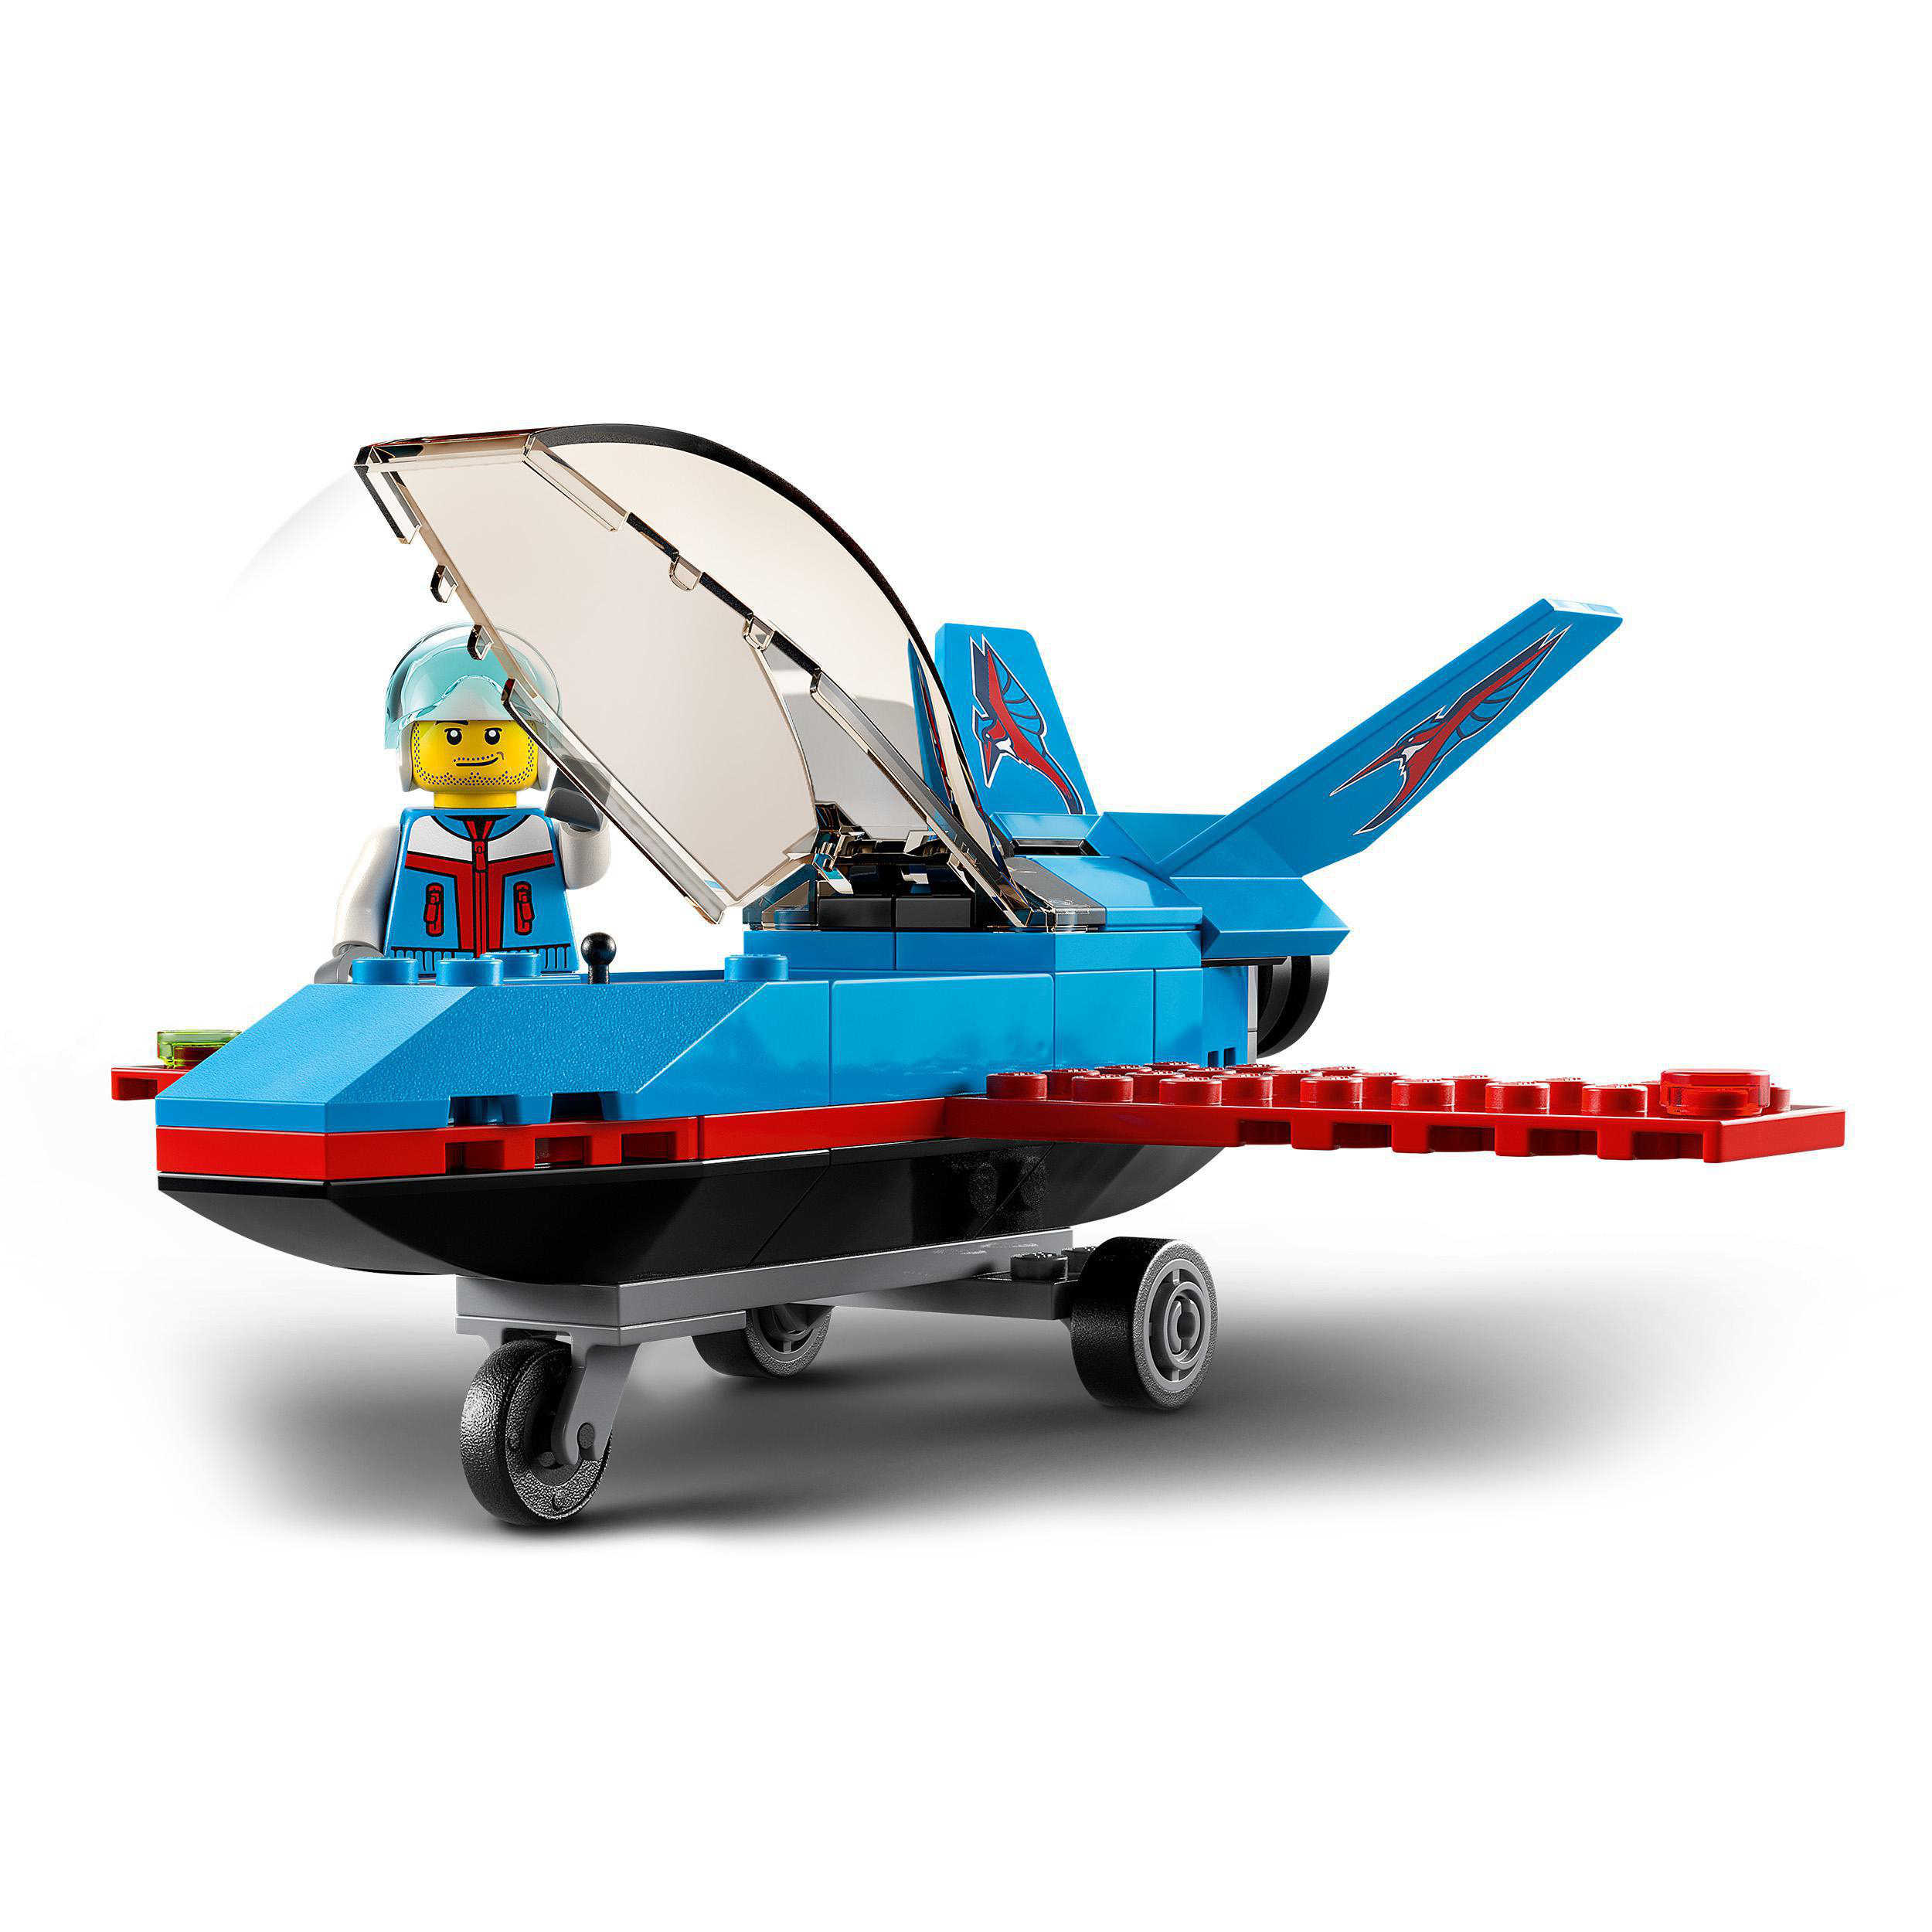 LEGO City 60323 Bausatz, Mehrfarbig Stuntflugzeug